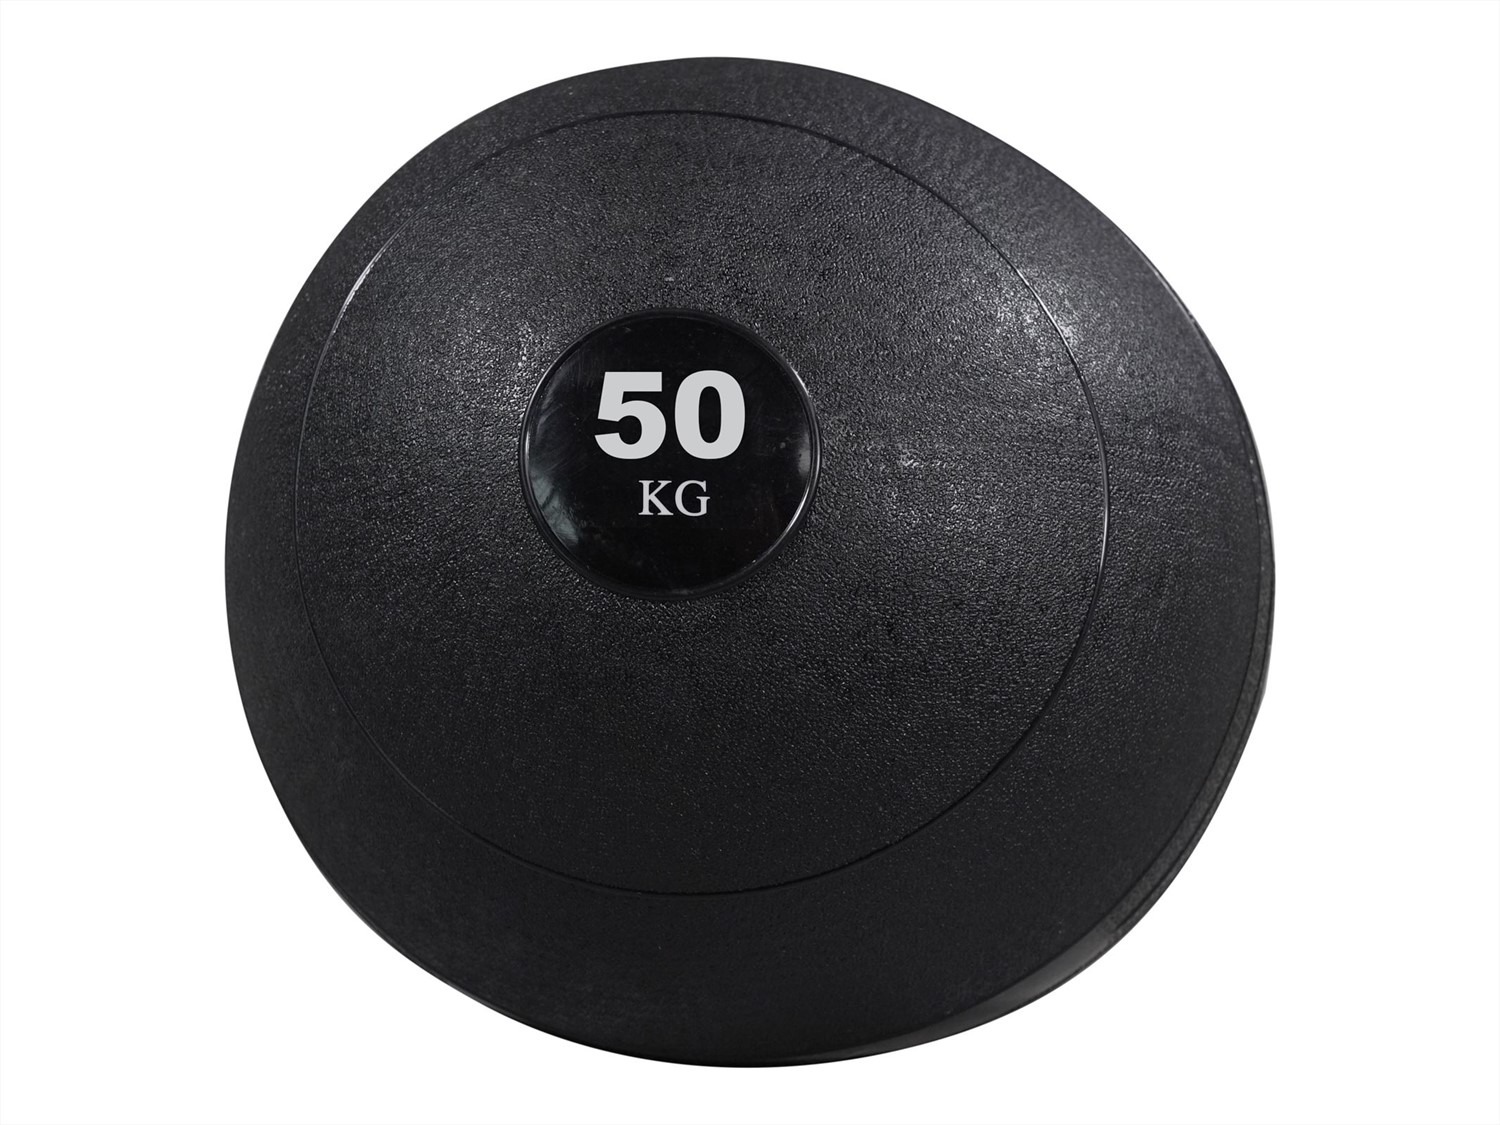 Lifemaxx Slam Ball - 50 kg